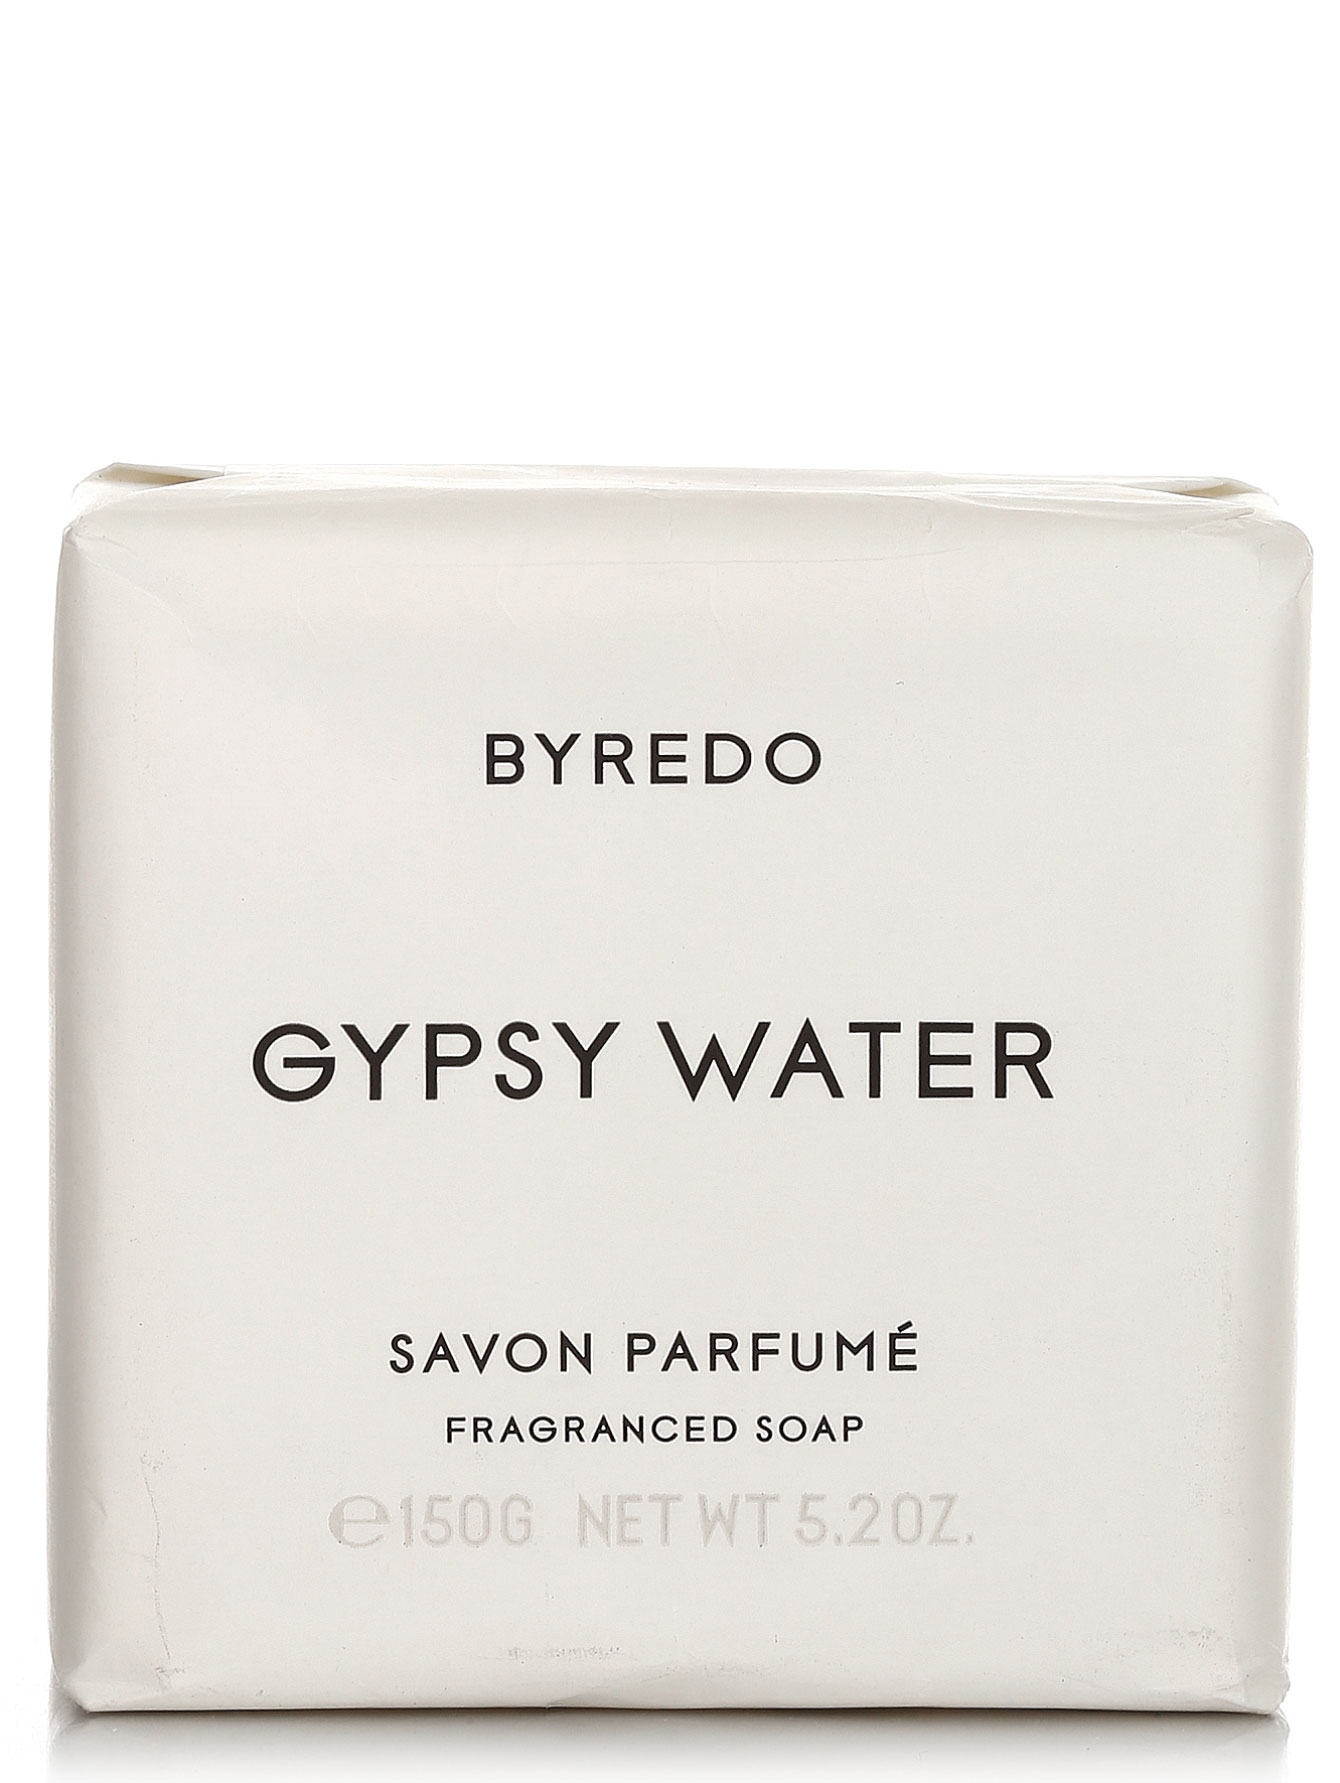  Мыло - Gypsy Water - Общий вид